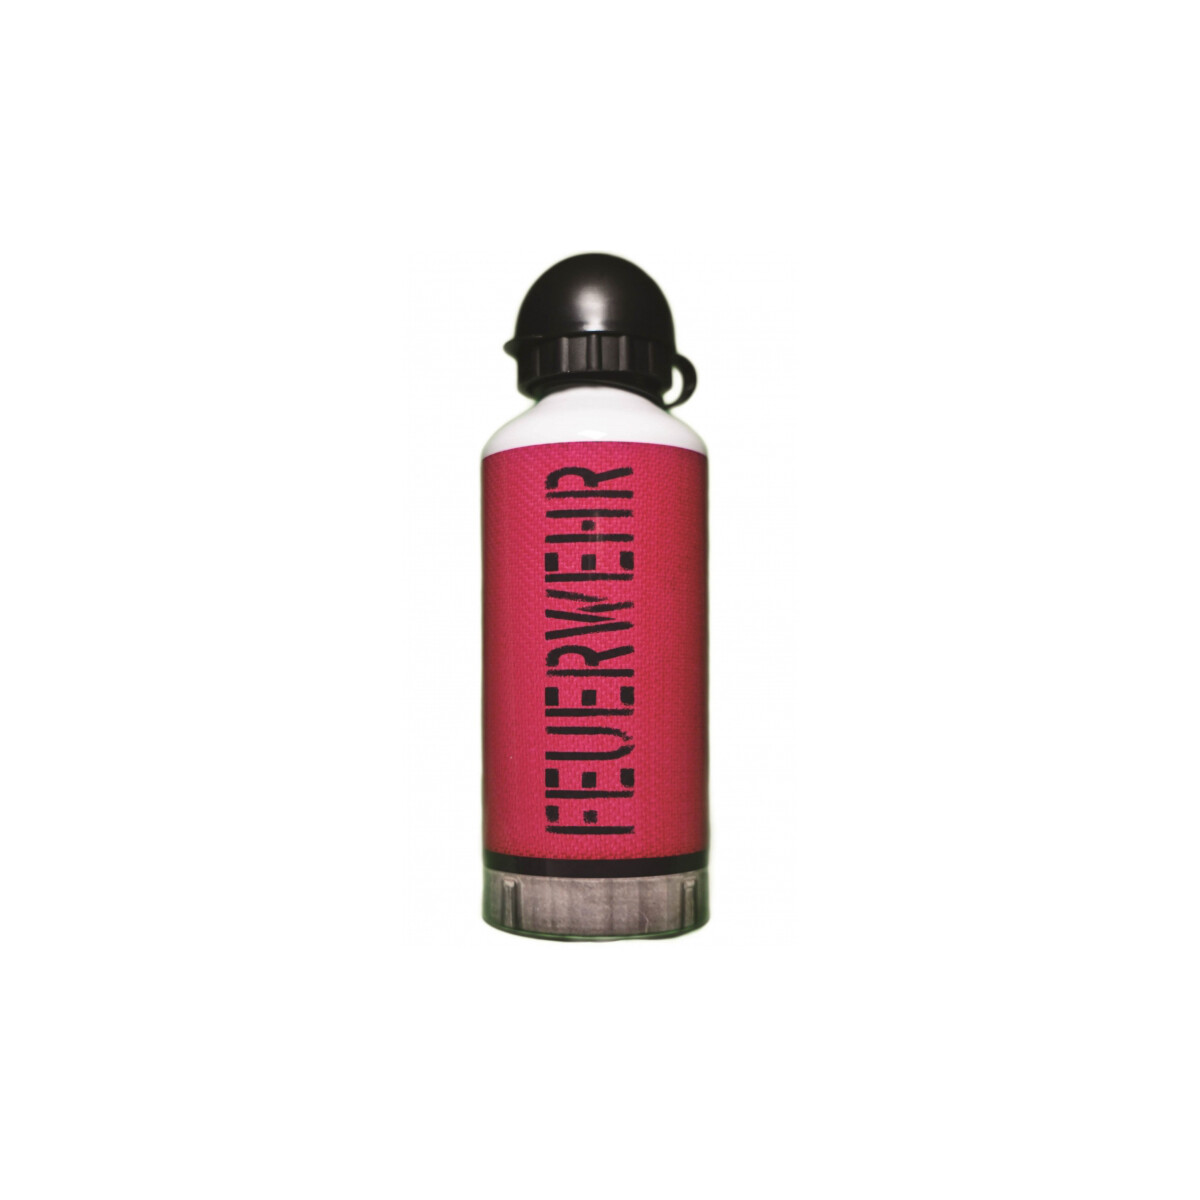 Trinkflasche Feuerwehrschlauch pink | BACKDRA